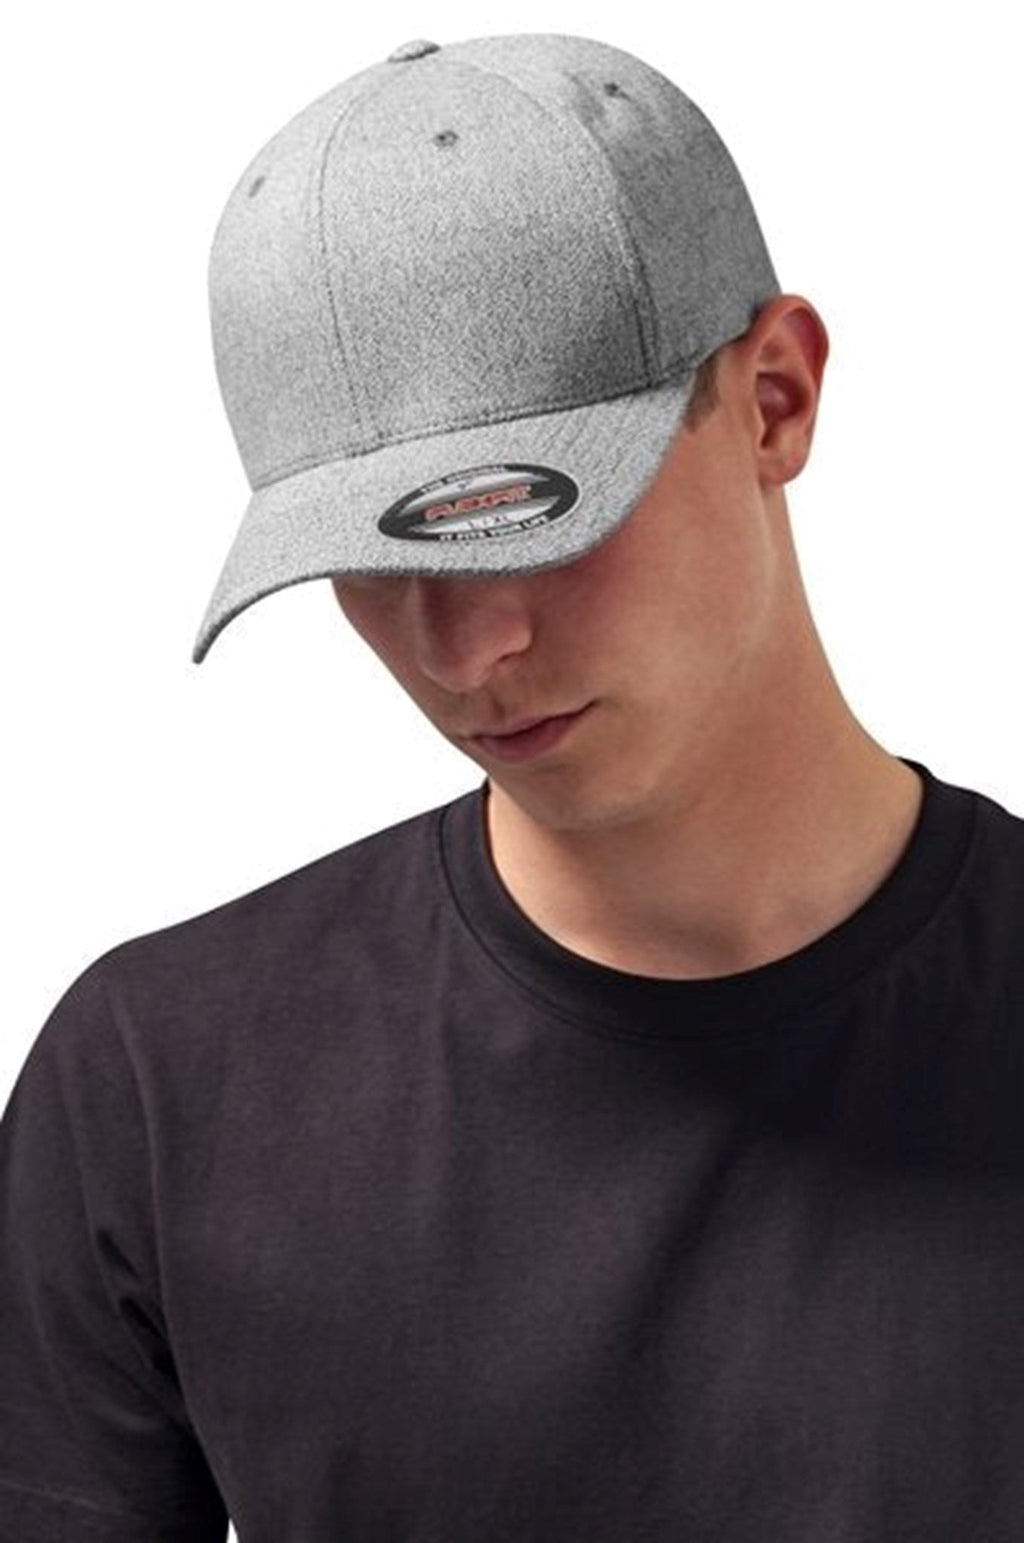 Flexfit Melange帽 - 灰色